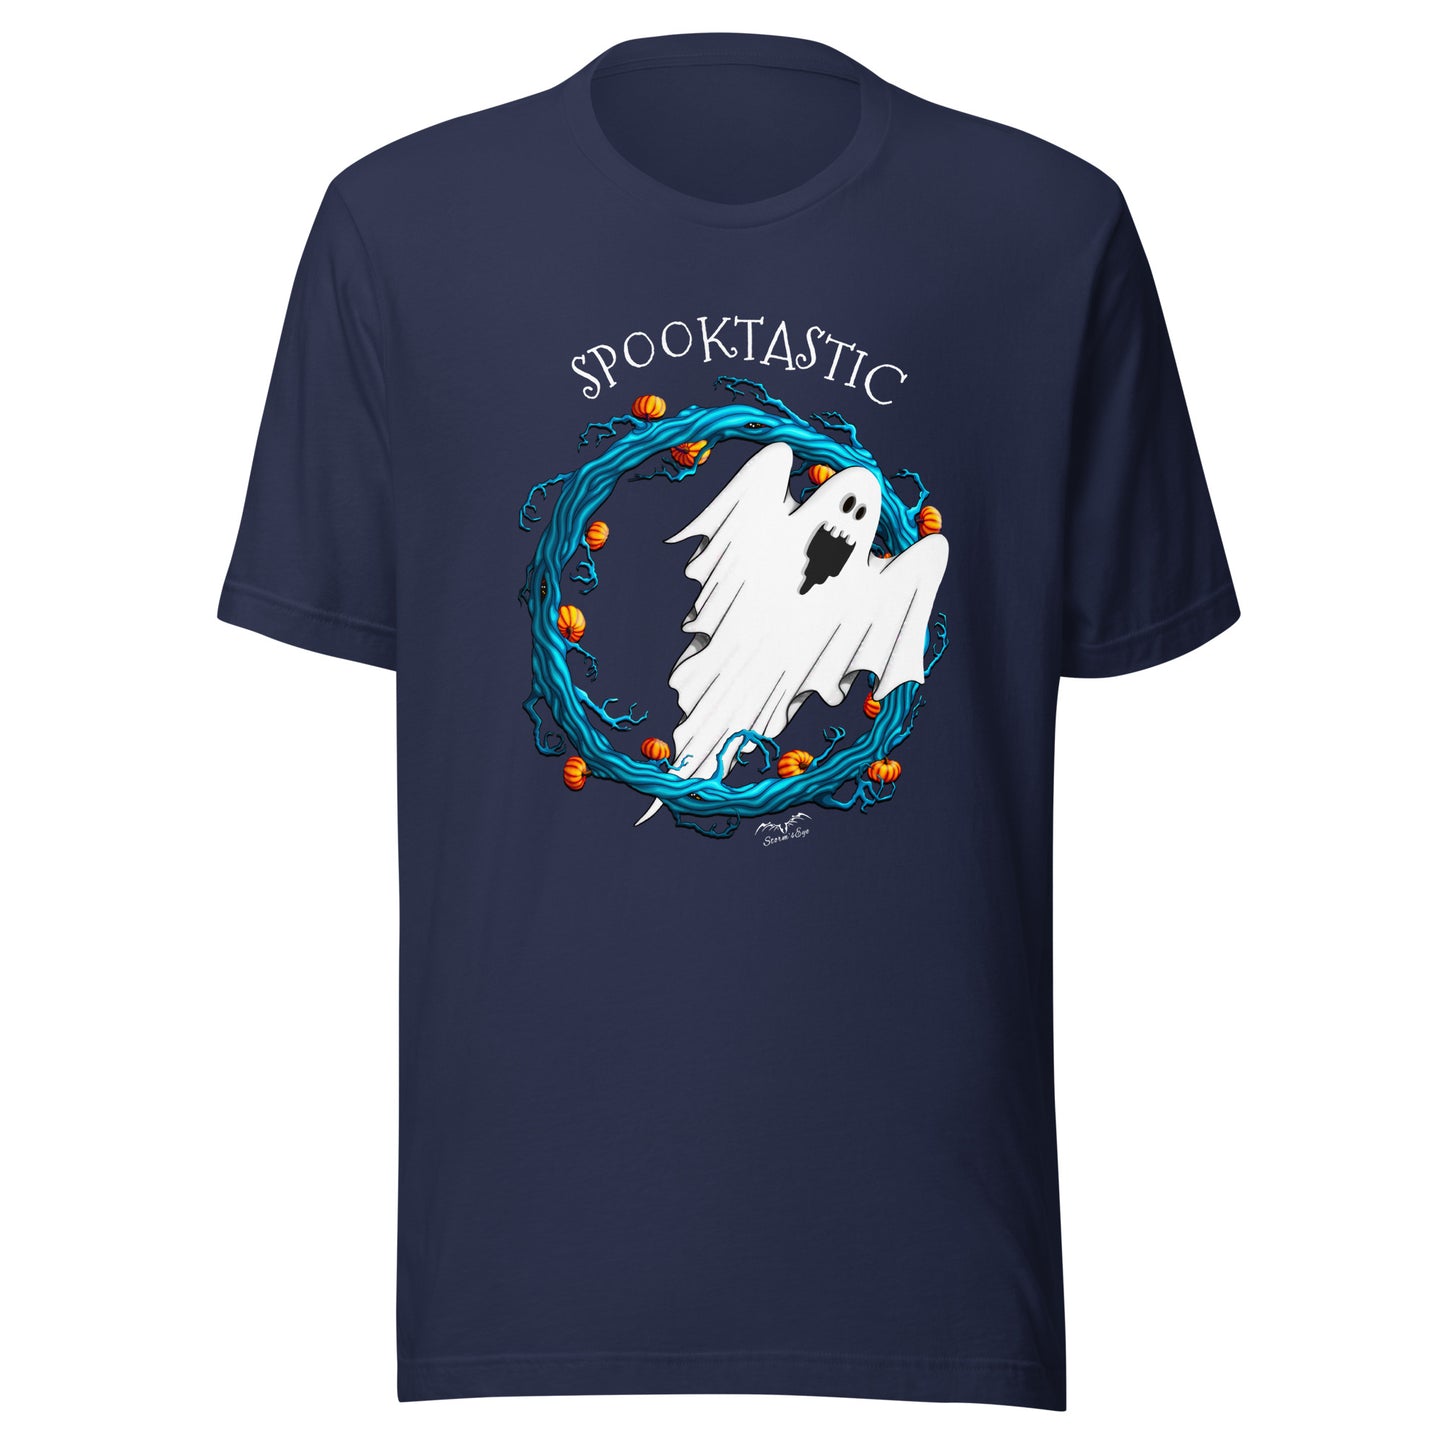 stormseye design halloween ghost spooktastic T shirt flat view navy blue